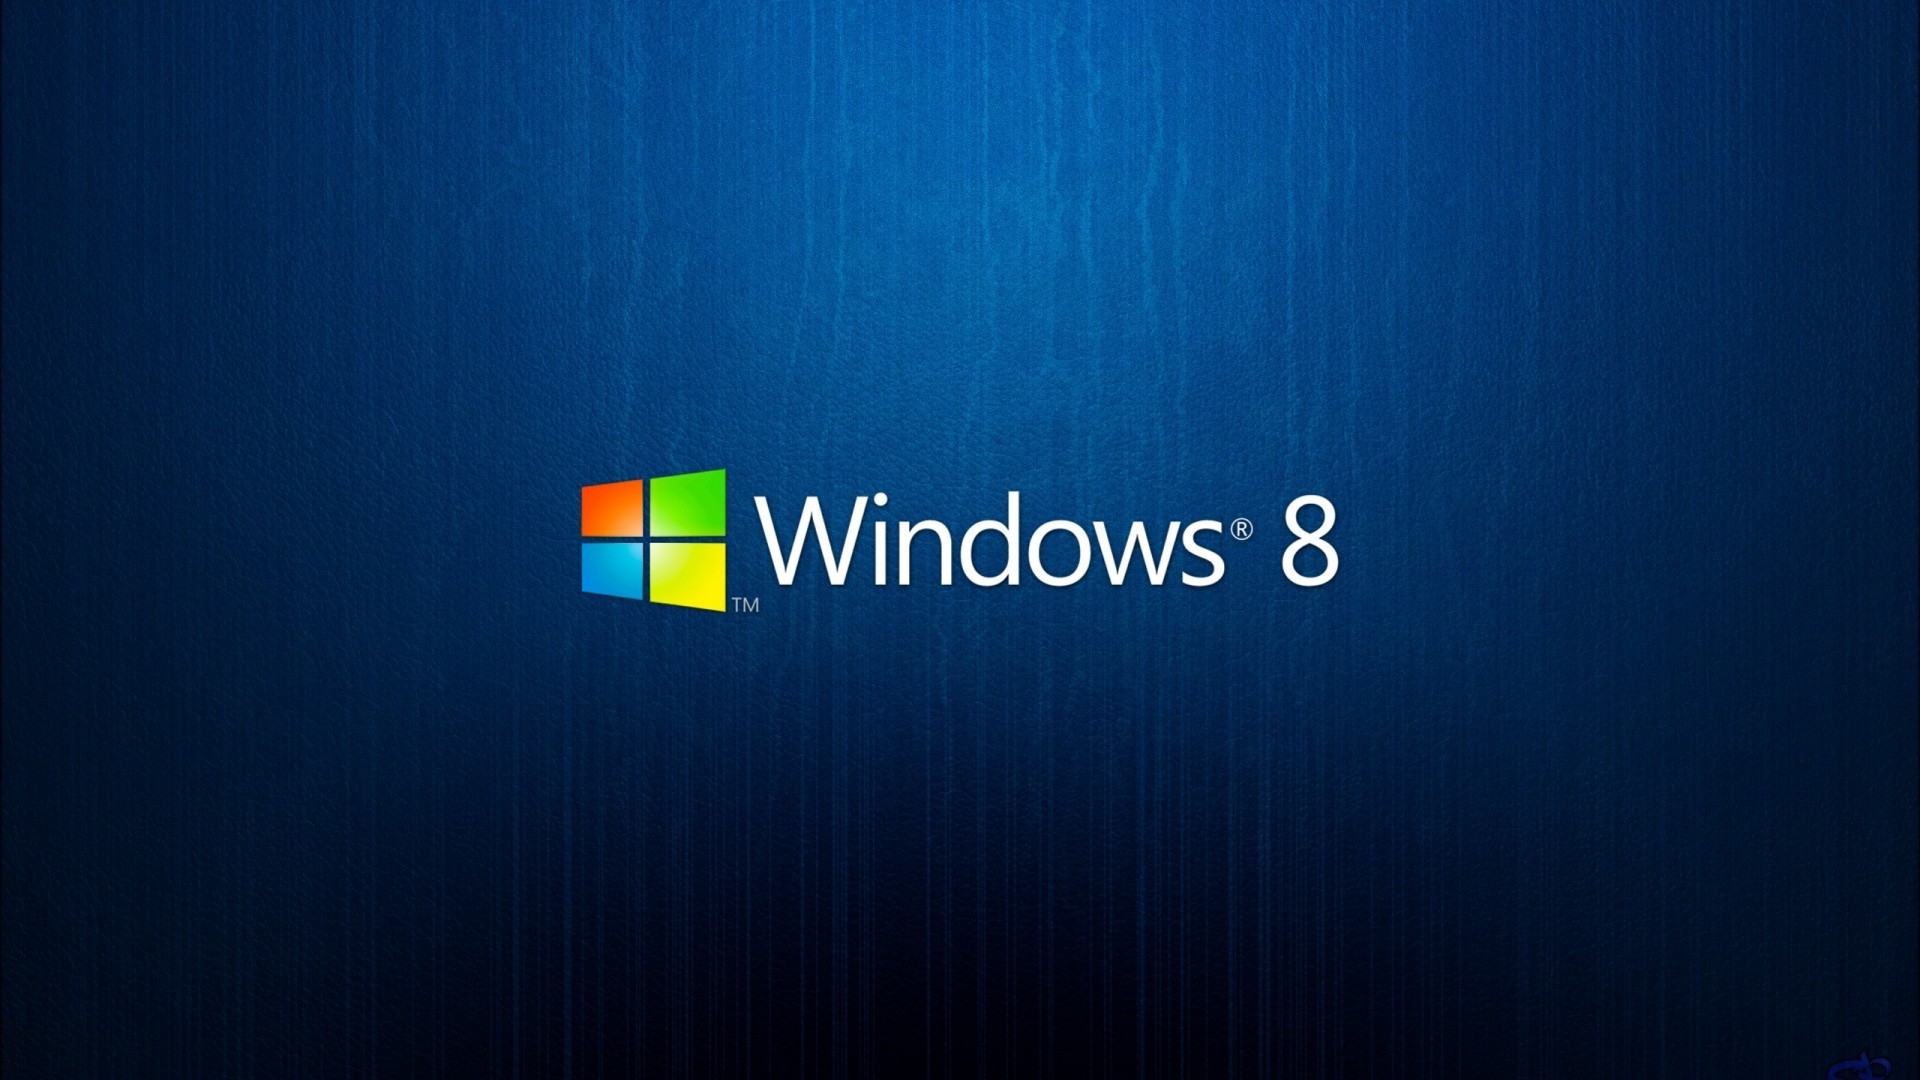 1920x1080 Windows 8 HD Wallpaper | Background Image |  | ID:461367 -  Wallpaper Abyss